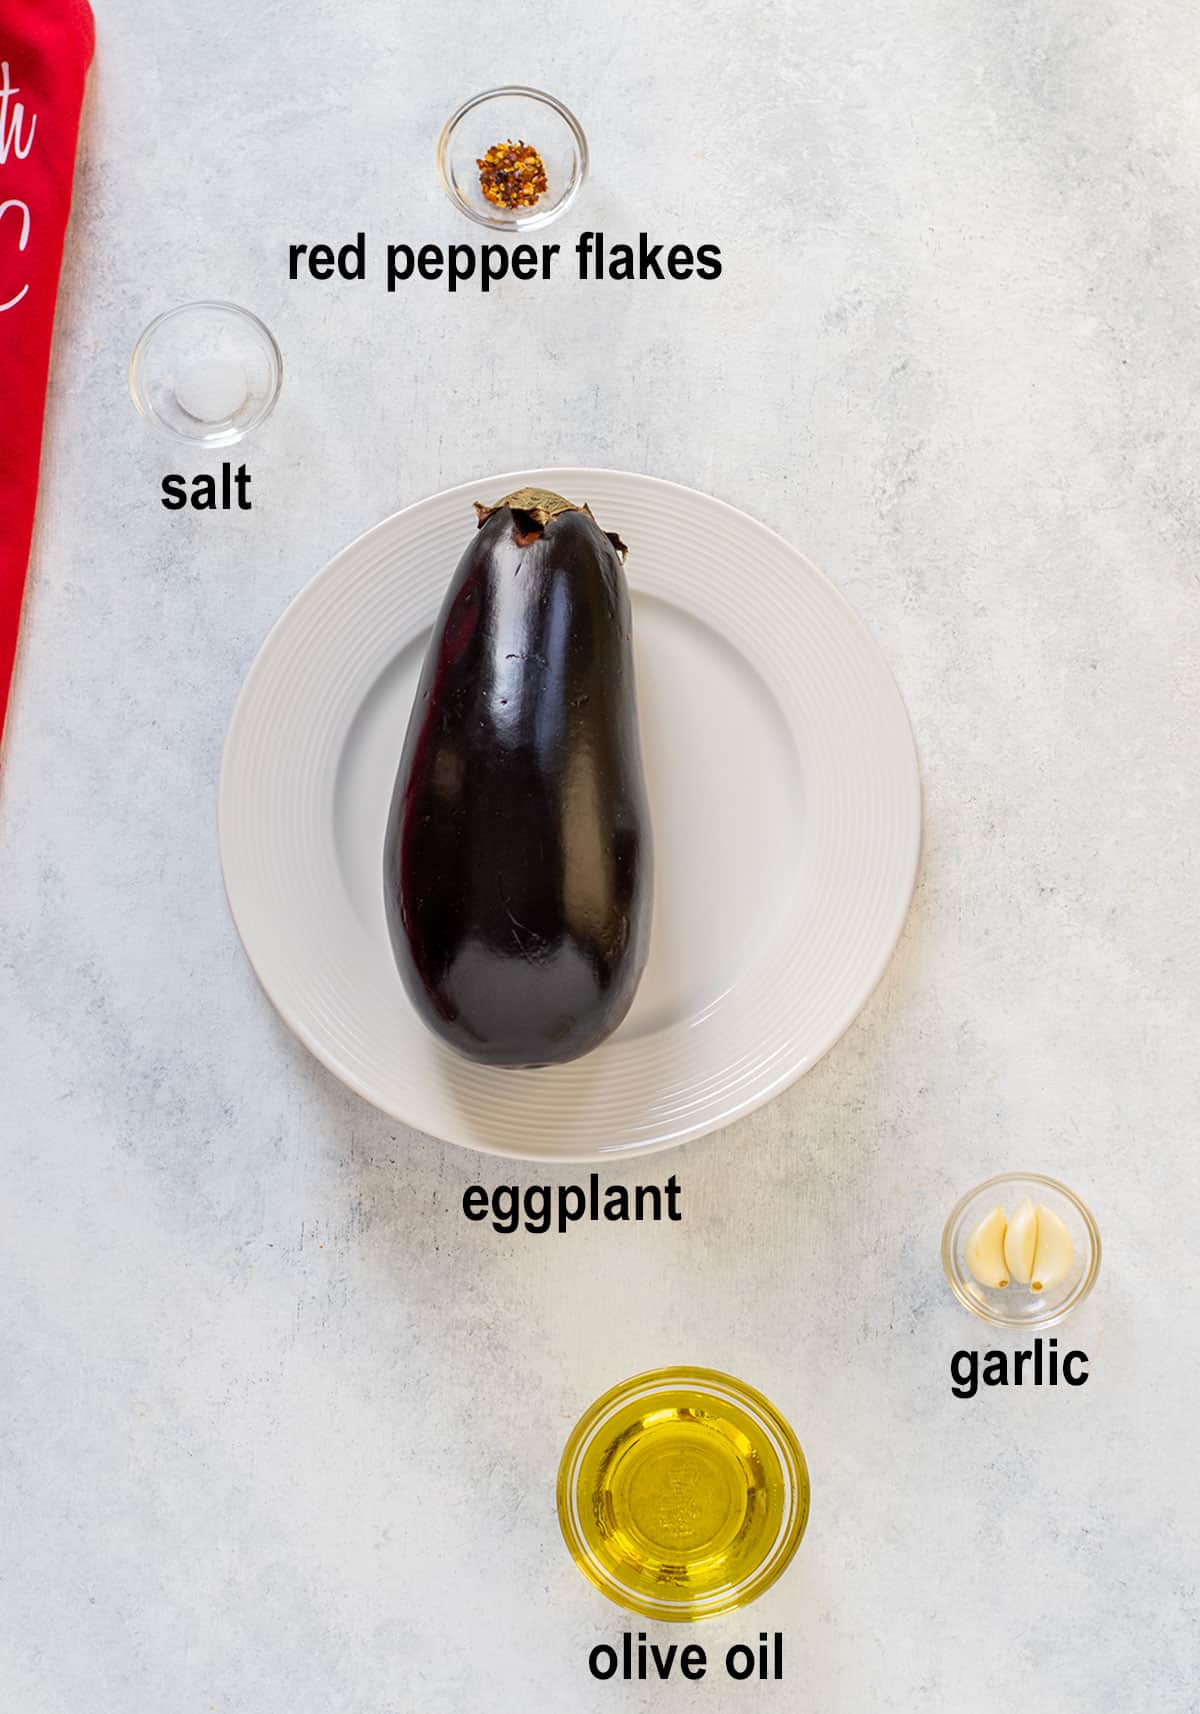 red pepper flakes, salt, eggplant, garlic, olive oil